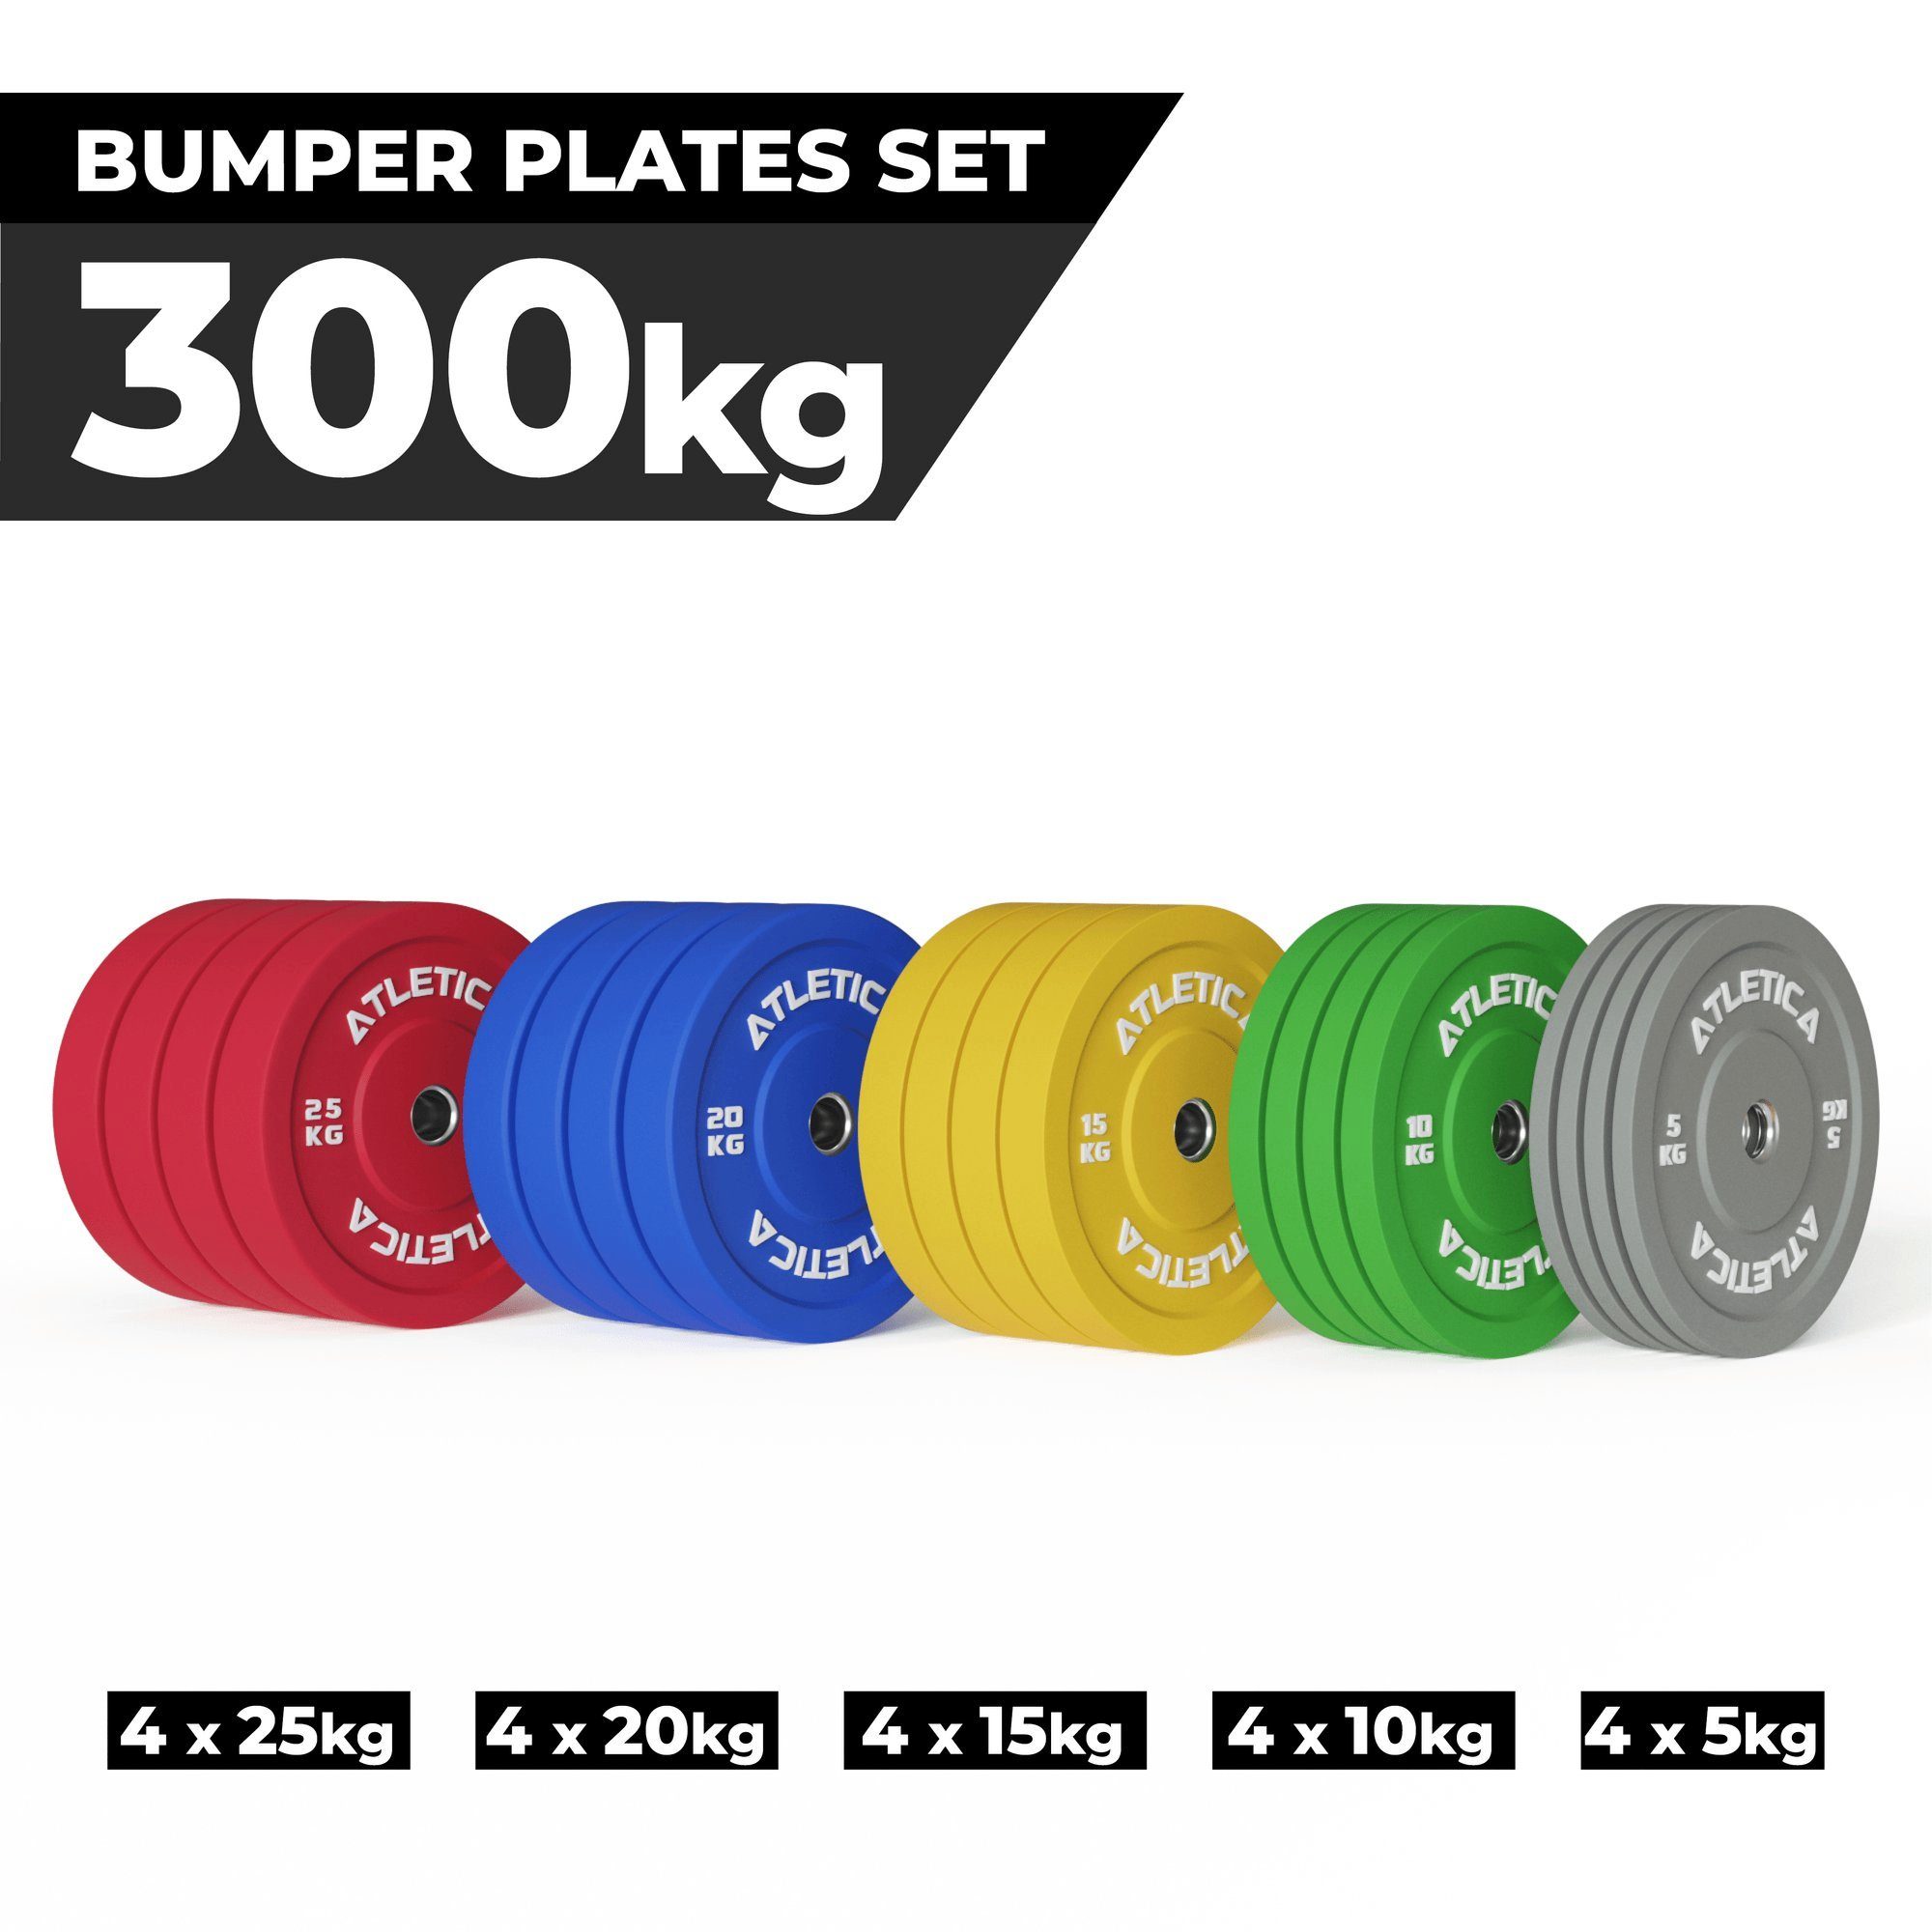 Hantelscheiben ATLETICA Plates 300kg Bumper Set Color